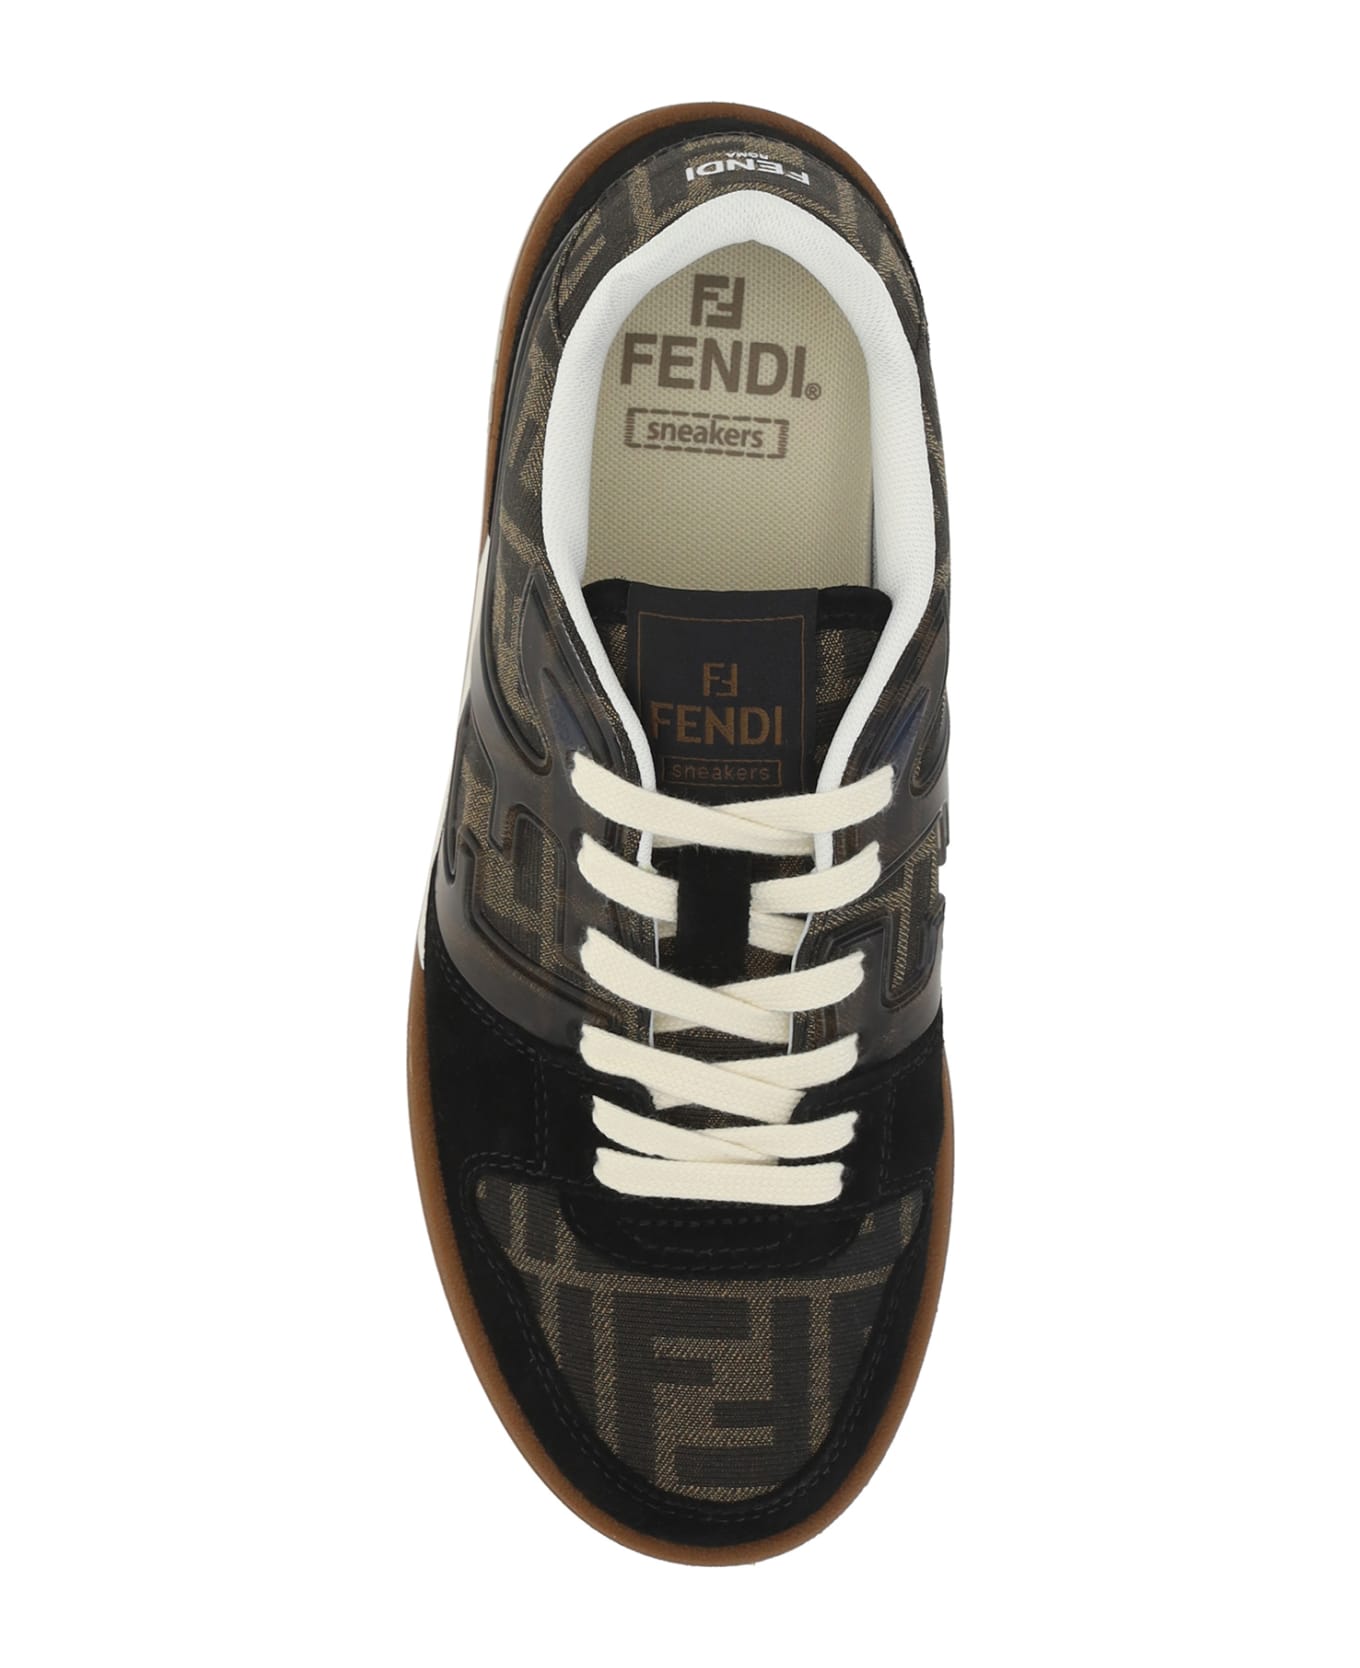 Fendi Match Sneakers - Nero/tab/bianco